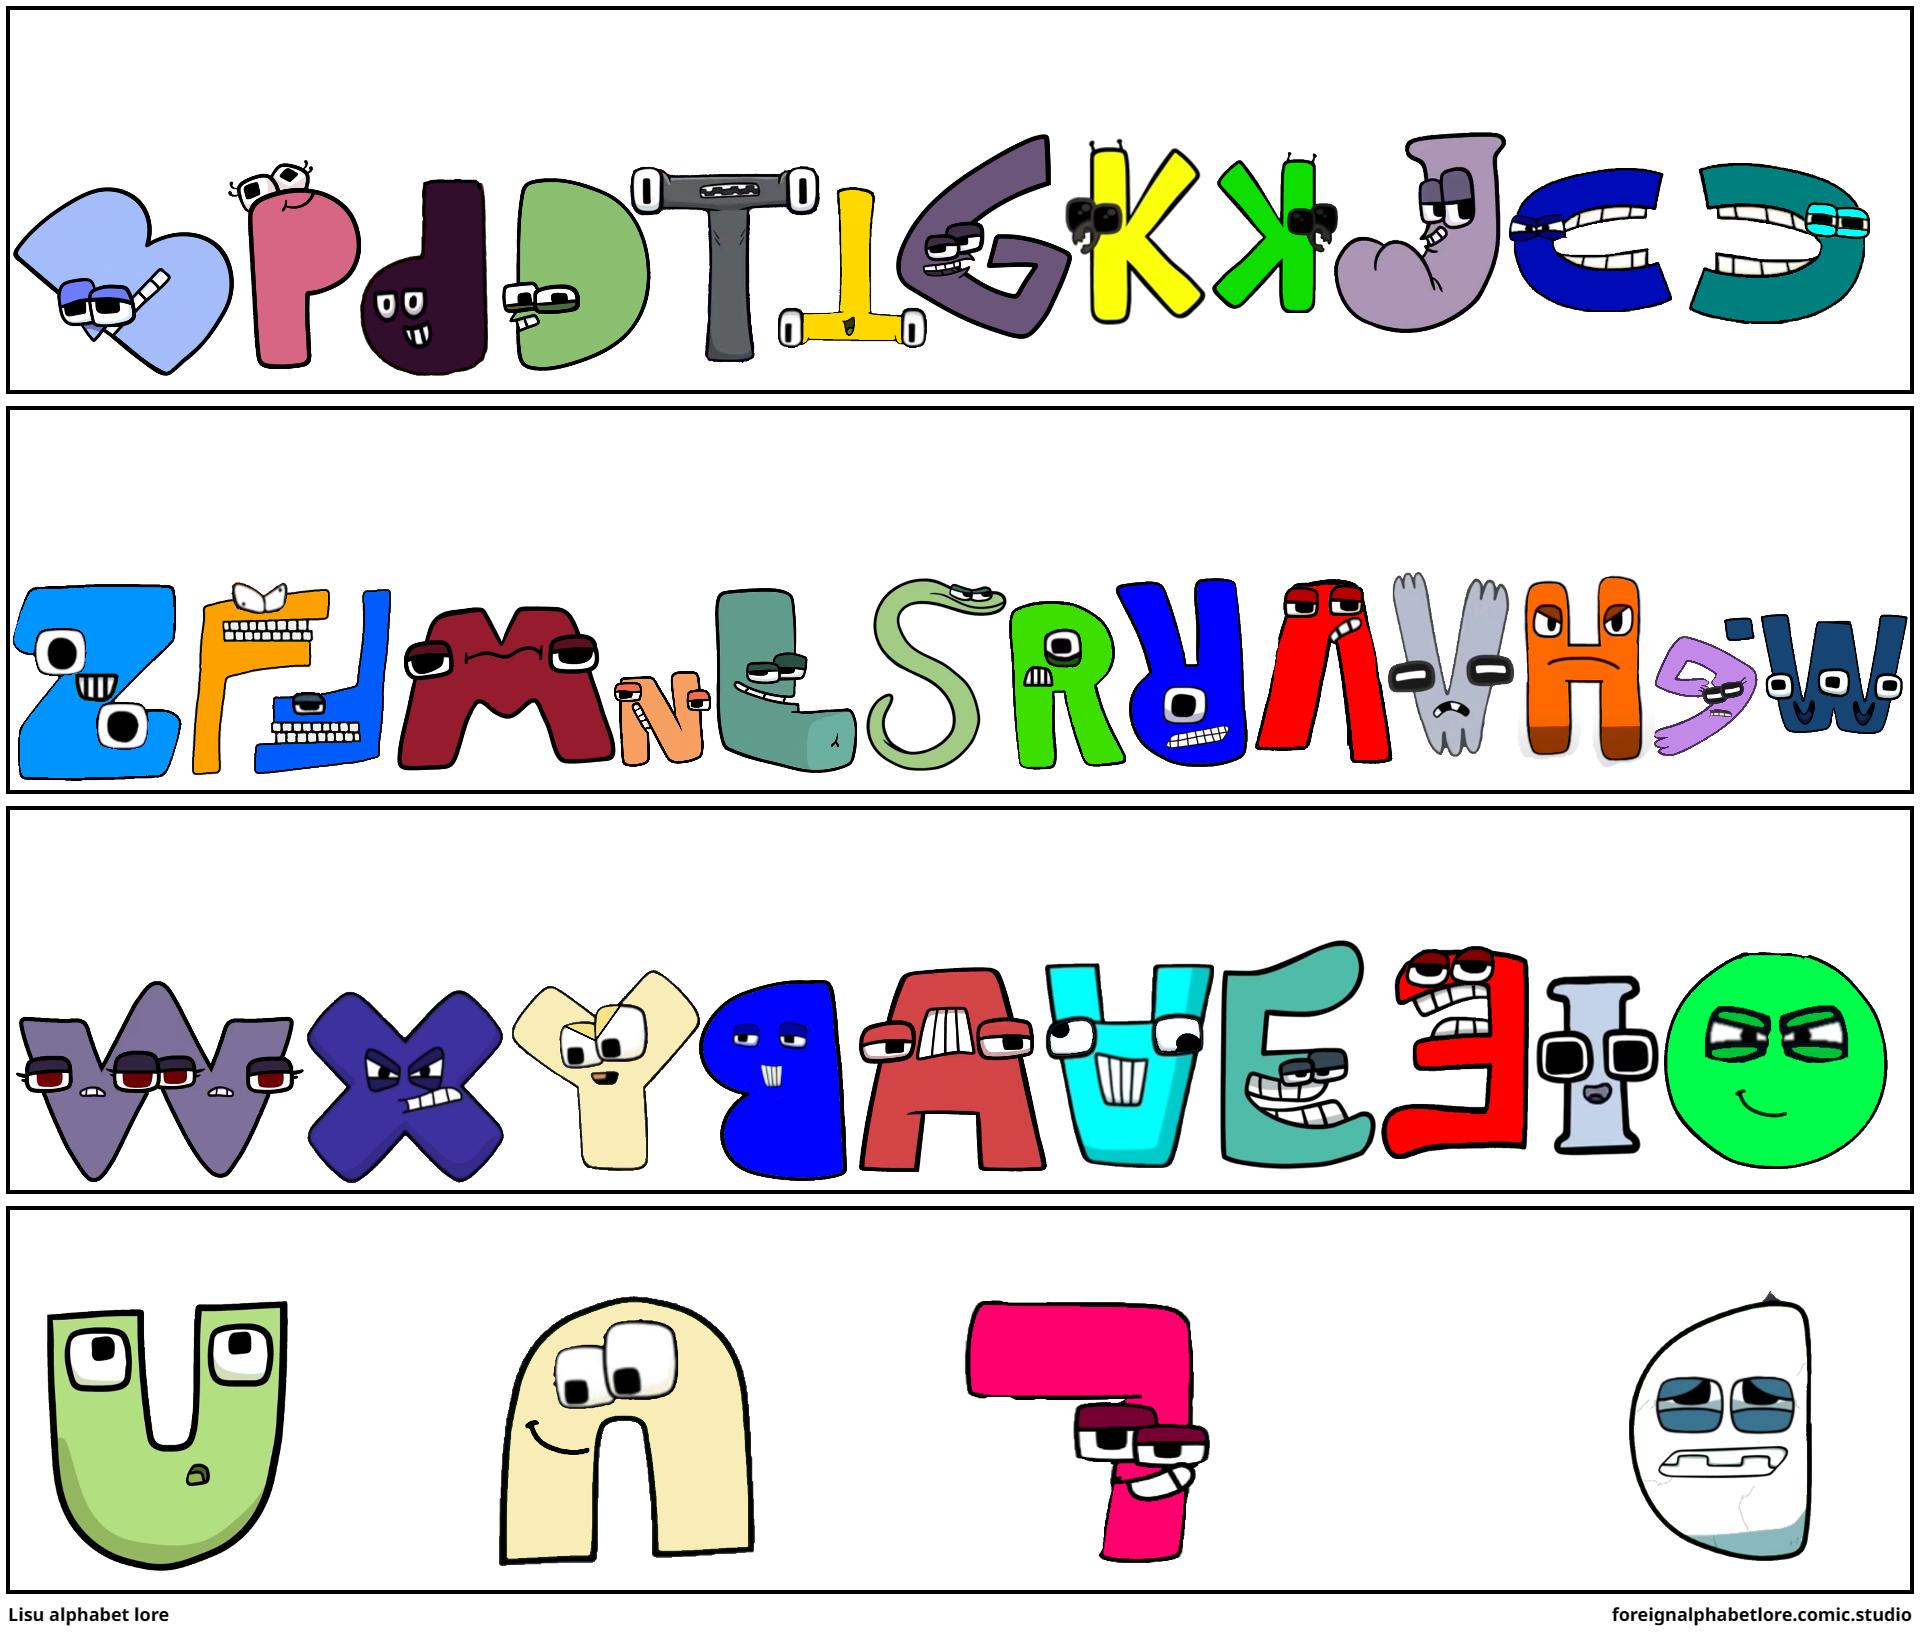 Lisu alphabet lore - Comic Studio